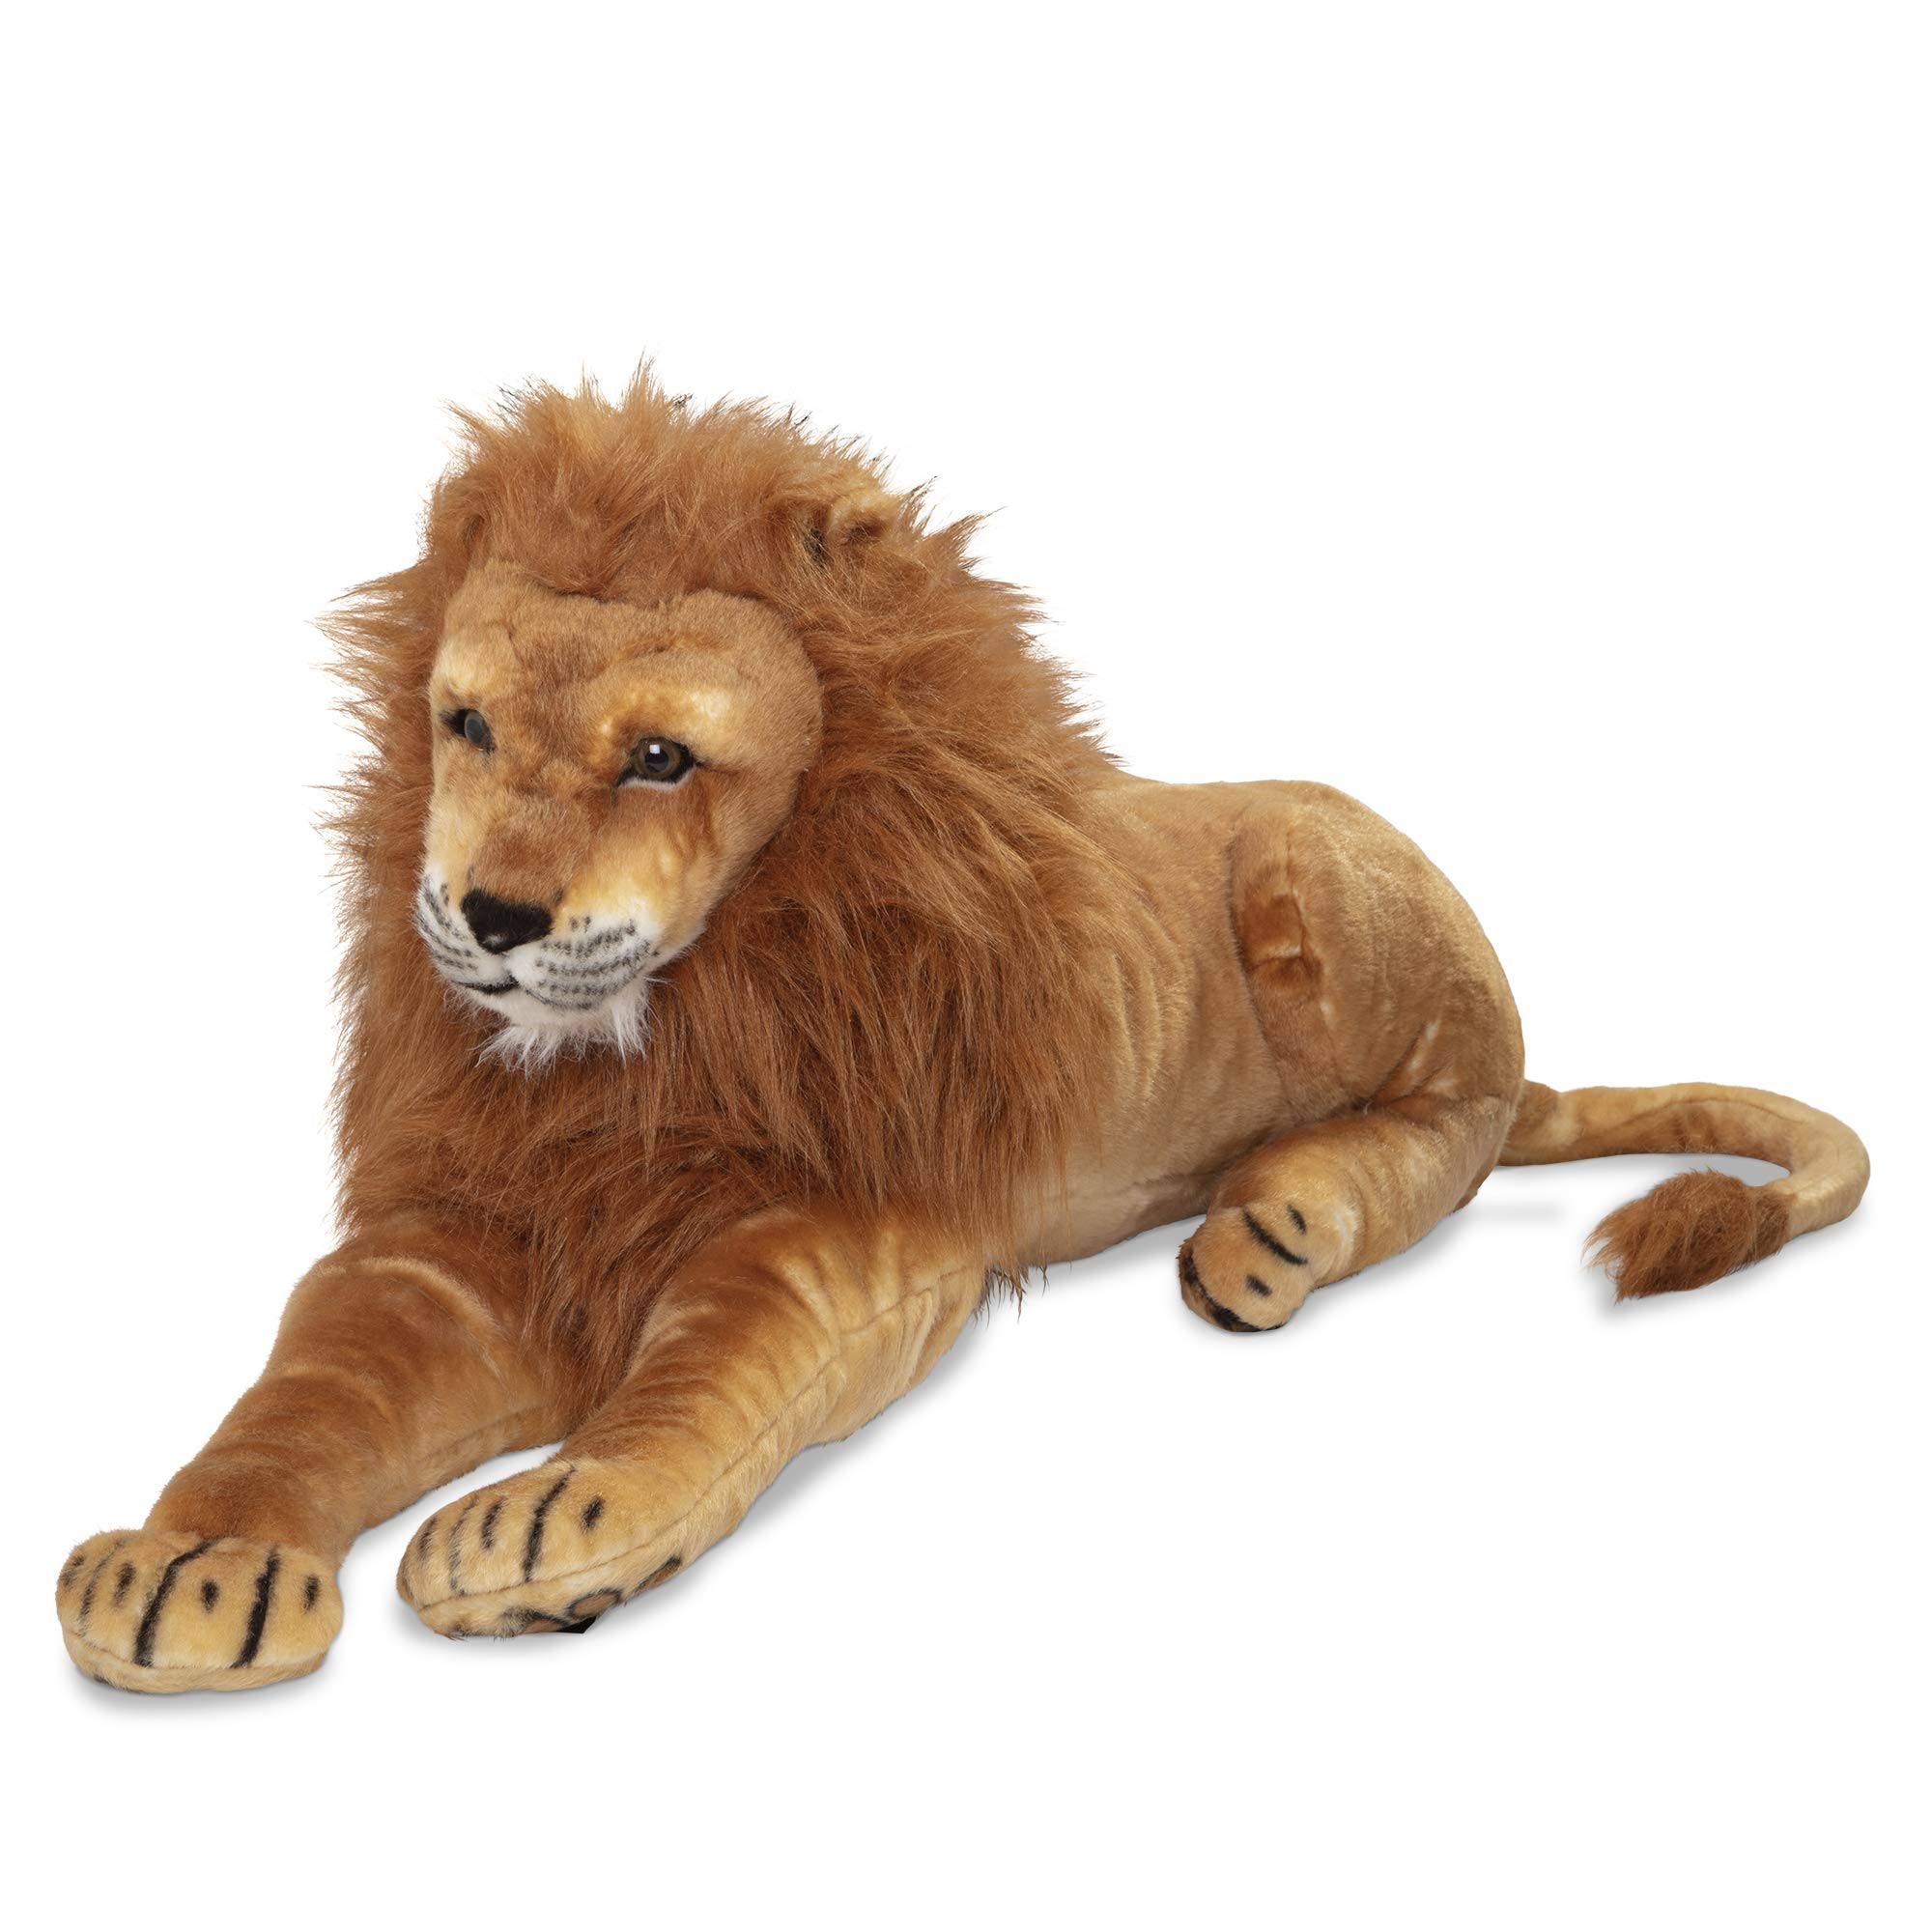 Melissa and Doug Huggable Plush Stuffed Lion Soft Toy - Large